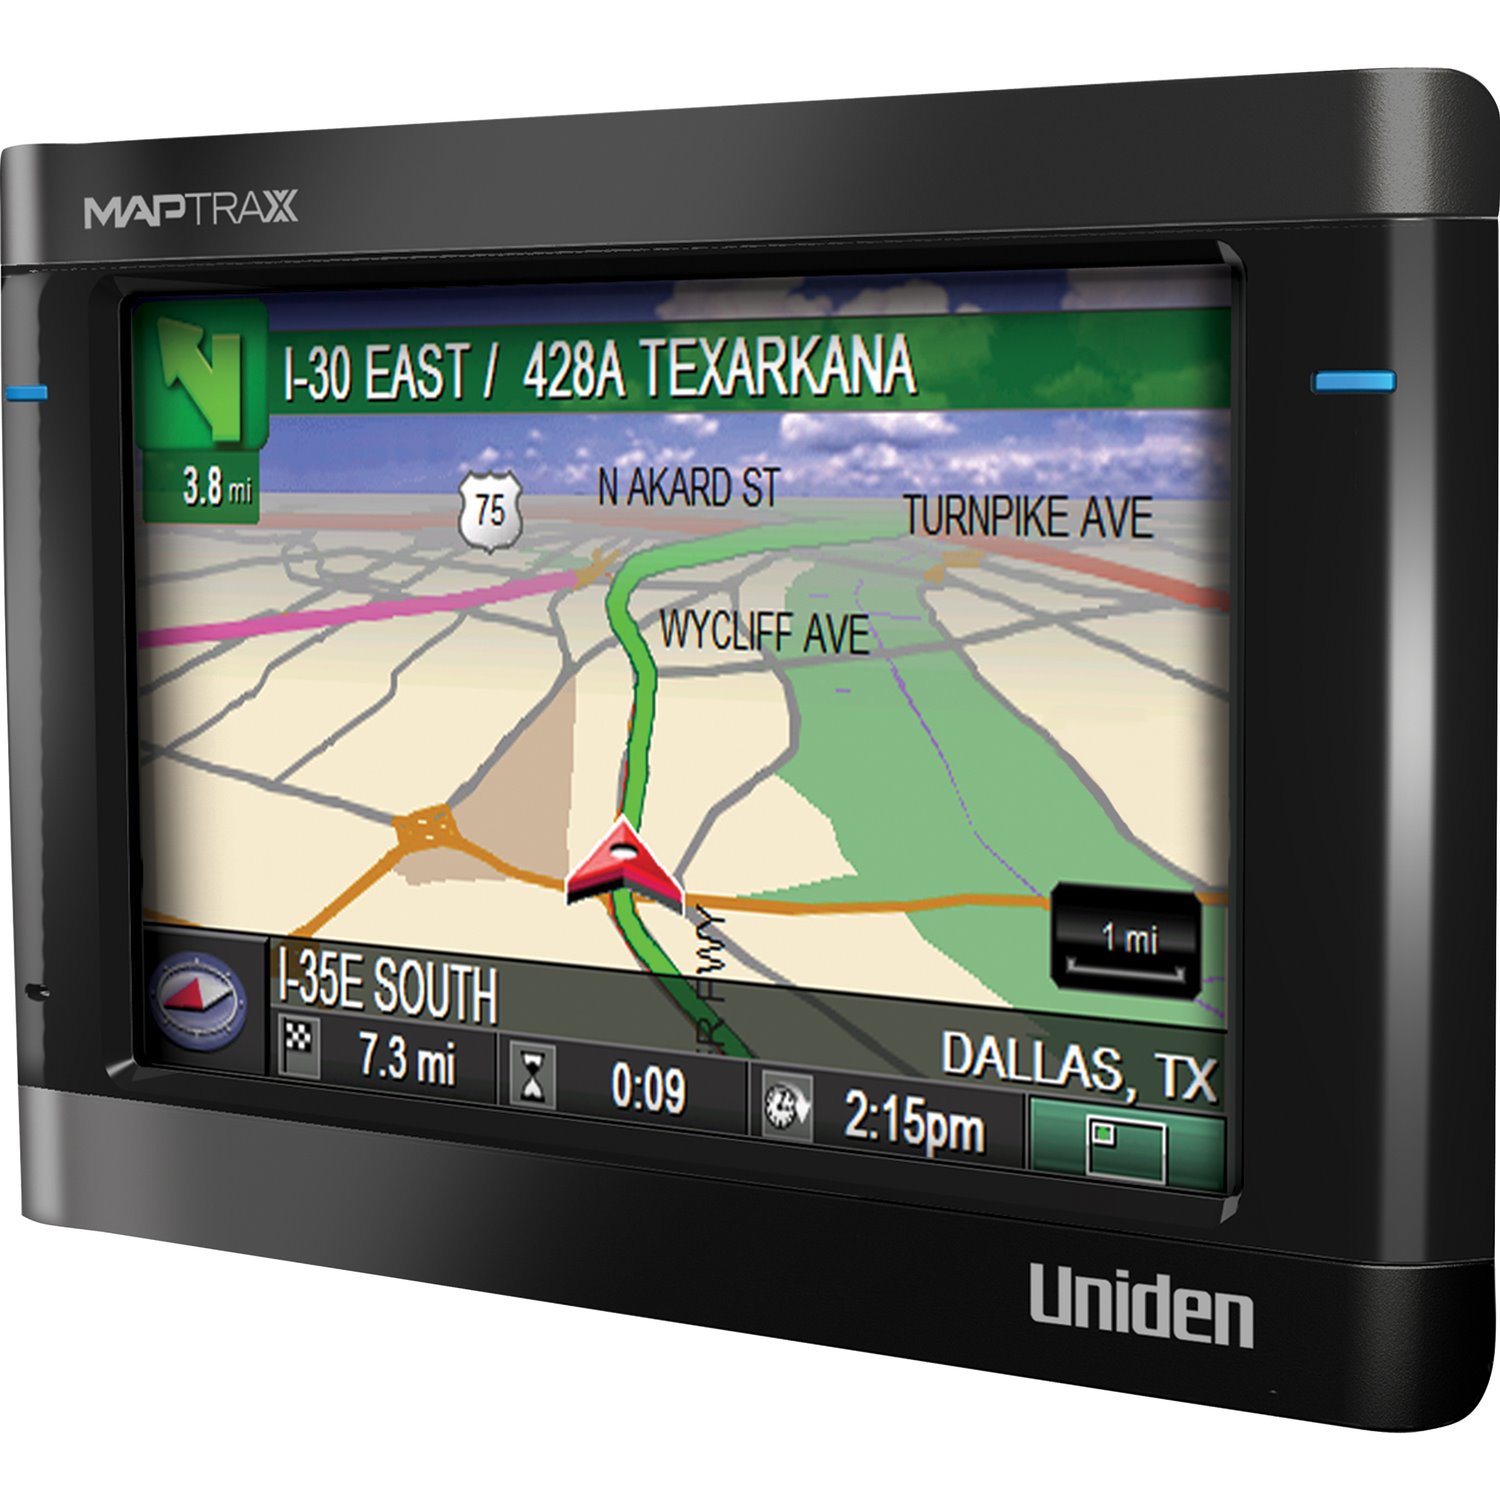 Uniden TRAX430 Automobile Navigator